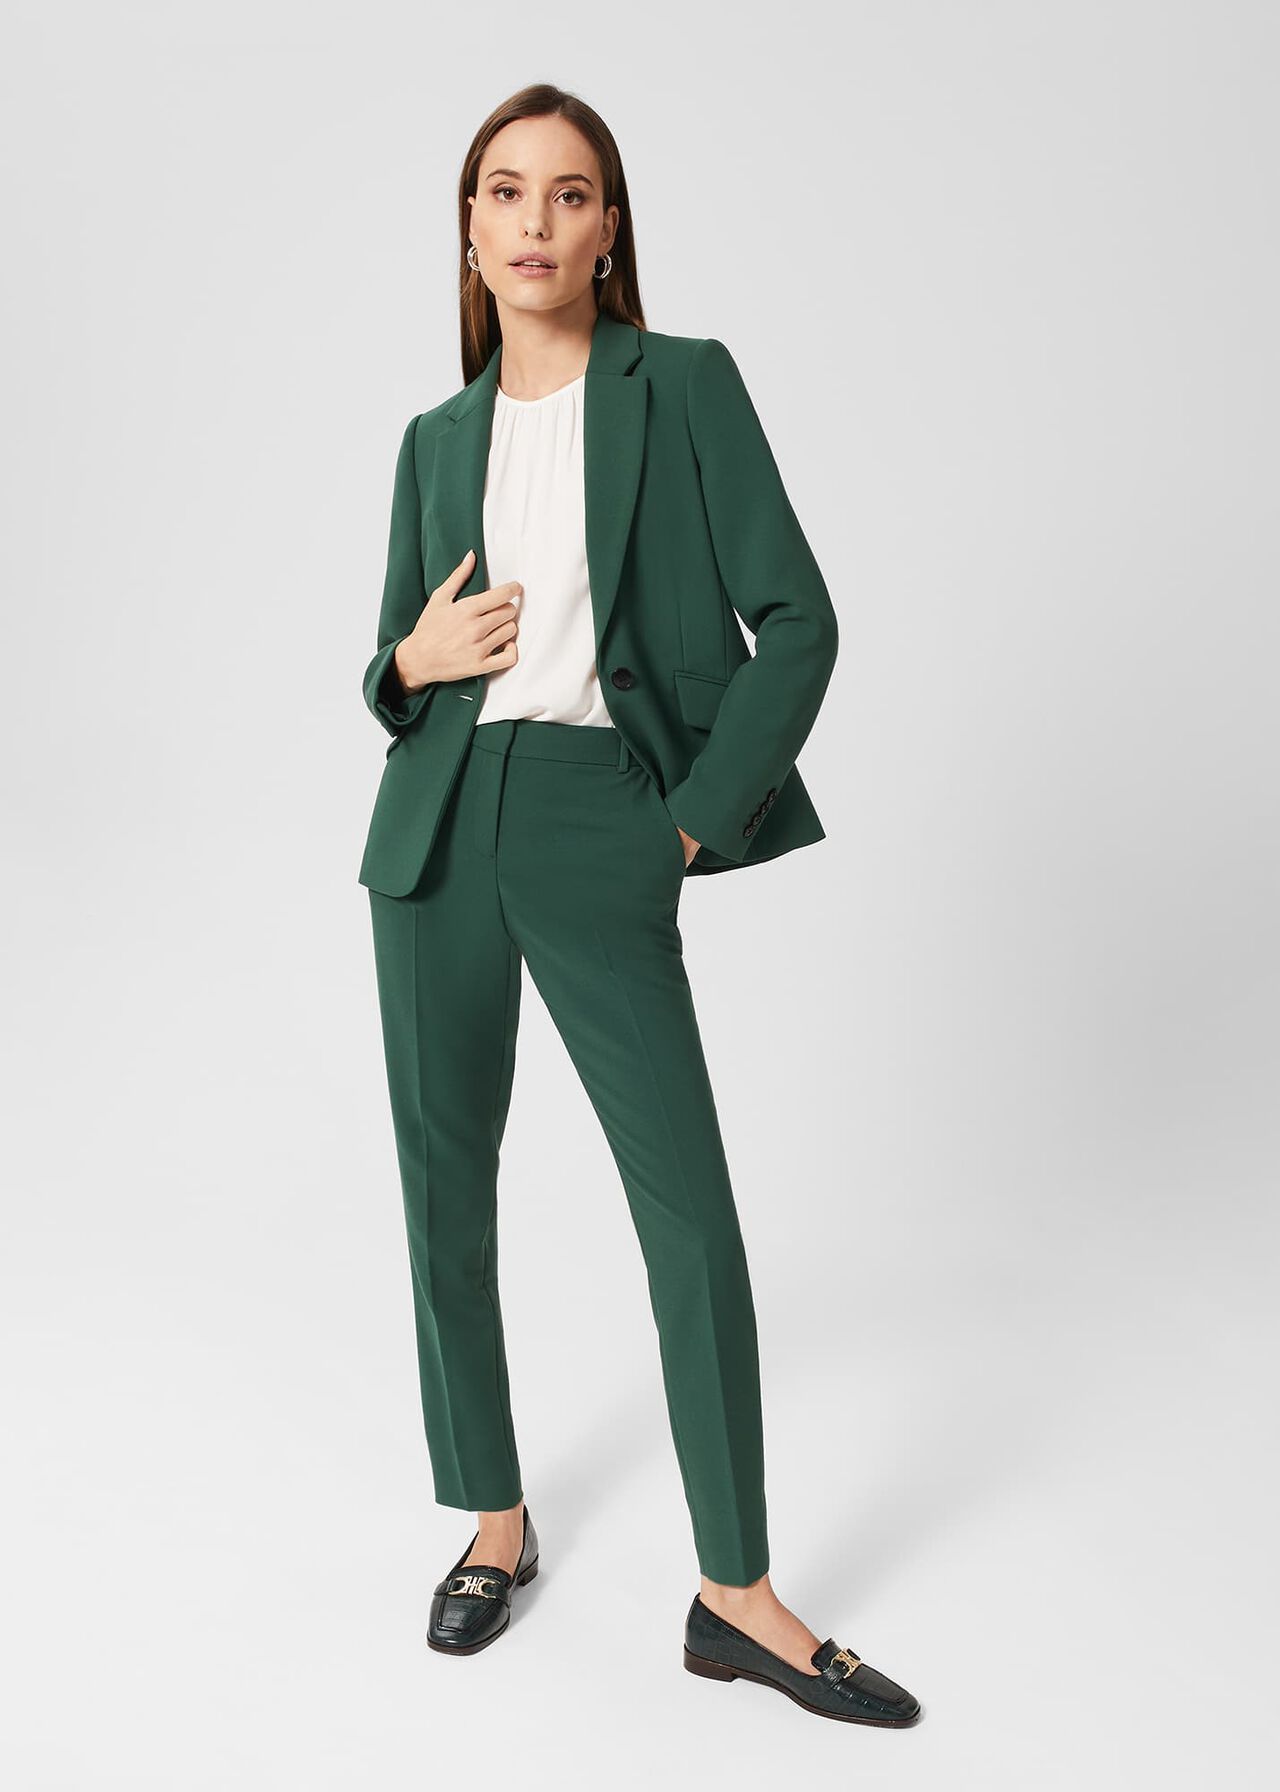 Green trouser suit